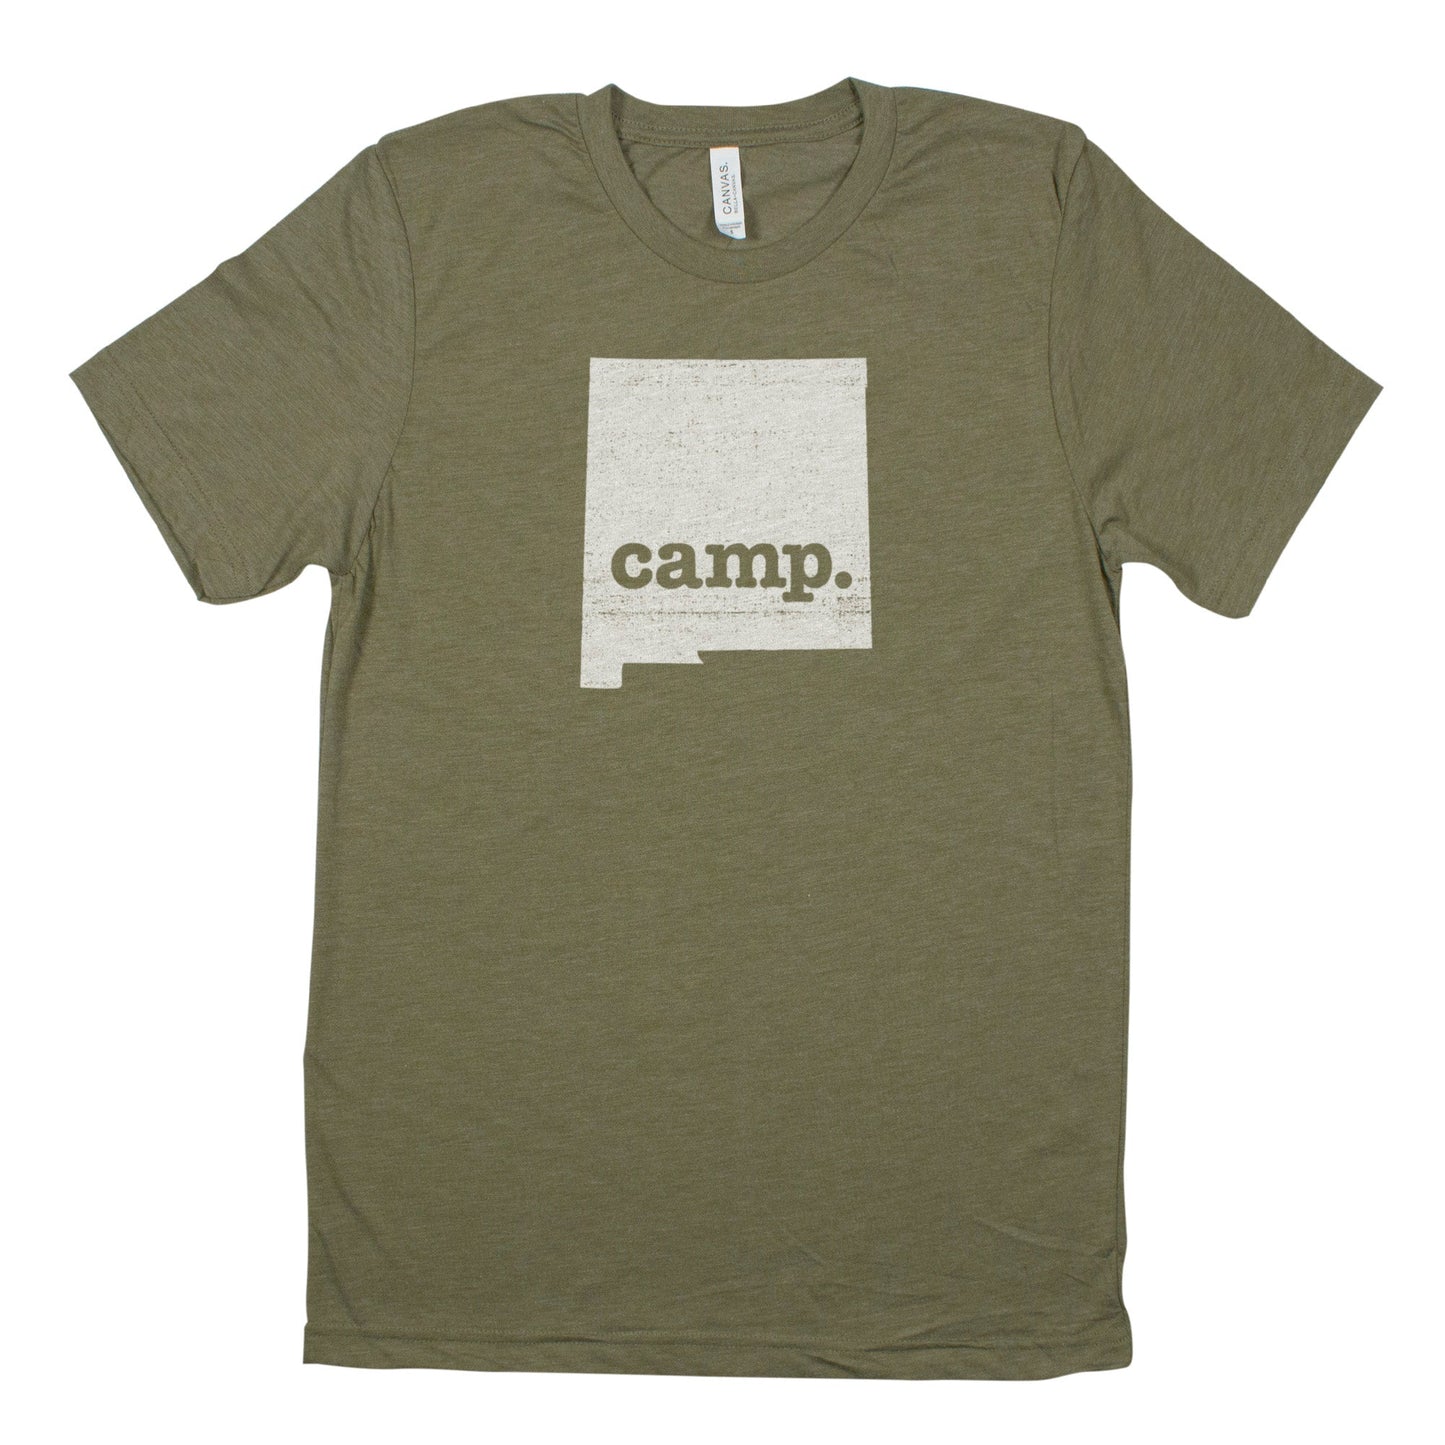 camp. Men's Unisex T-Shirt - New Mexico